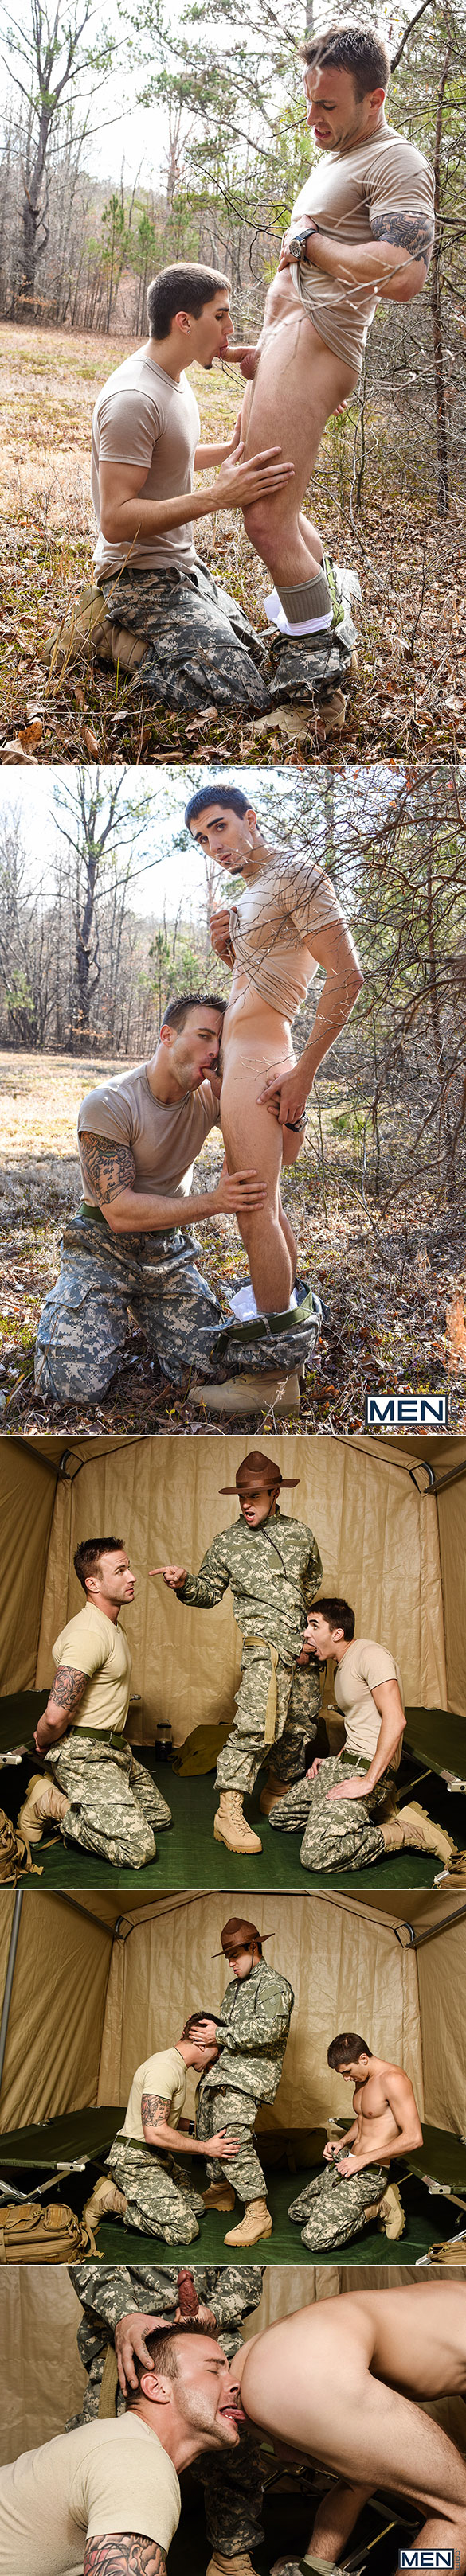 Men.com: Aspen tops Damien Kyle and Tanner Tatum in "Drill the Sergeant"